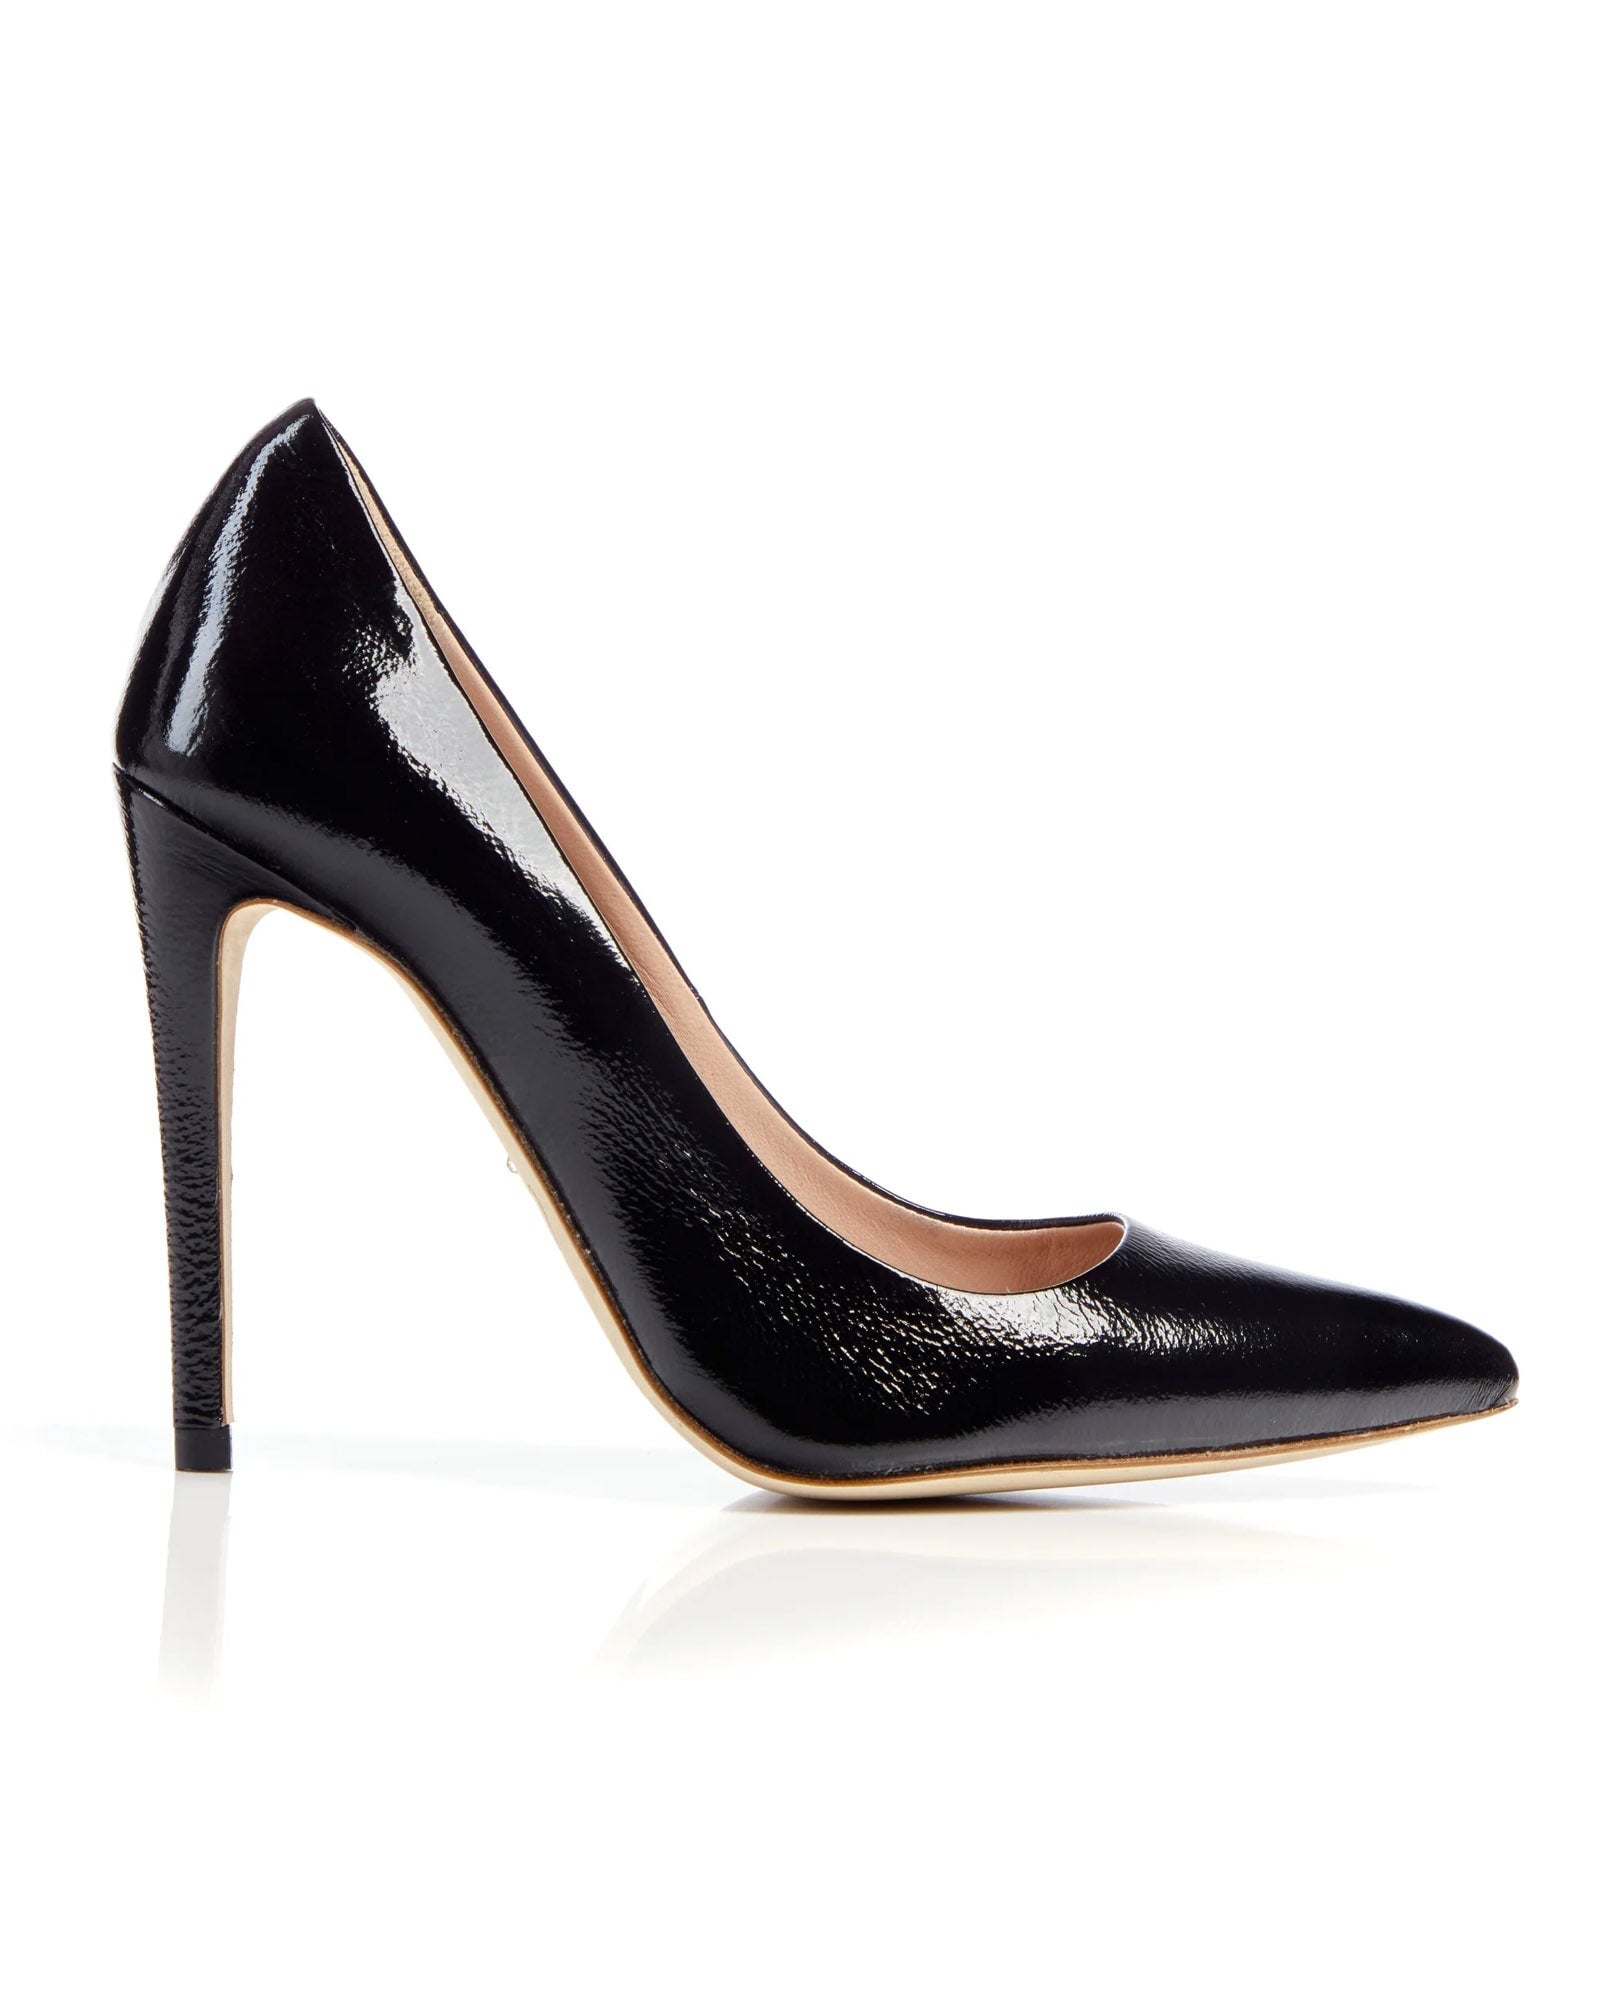 Rebecca Patent Black Leather Fashion Shoe Black Leather Pointed Court Shoe  image